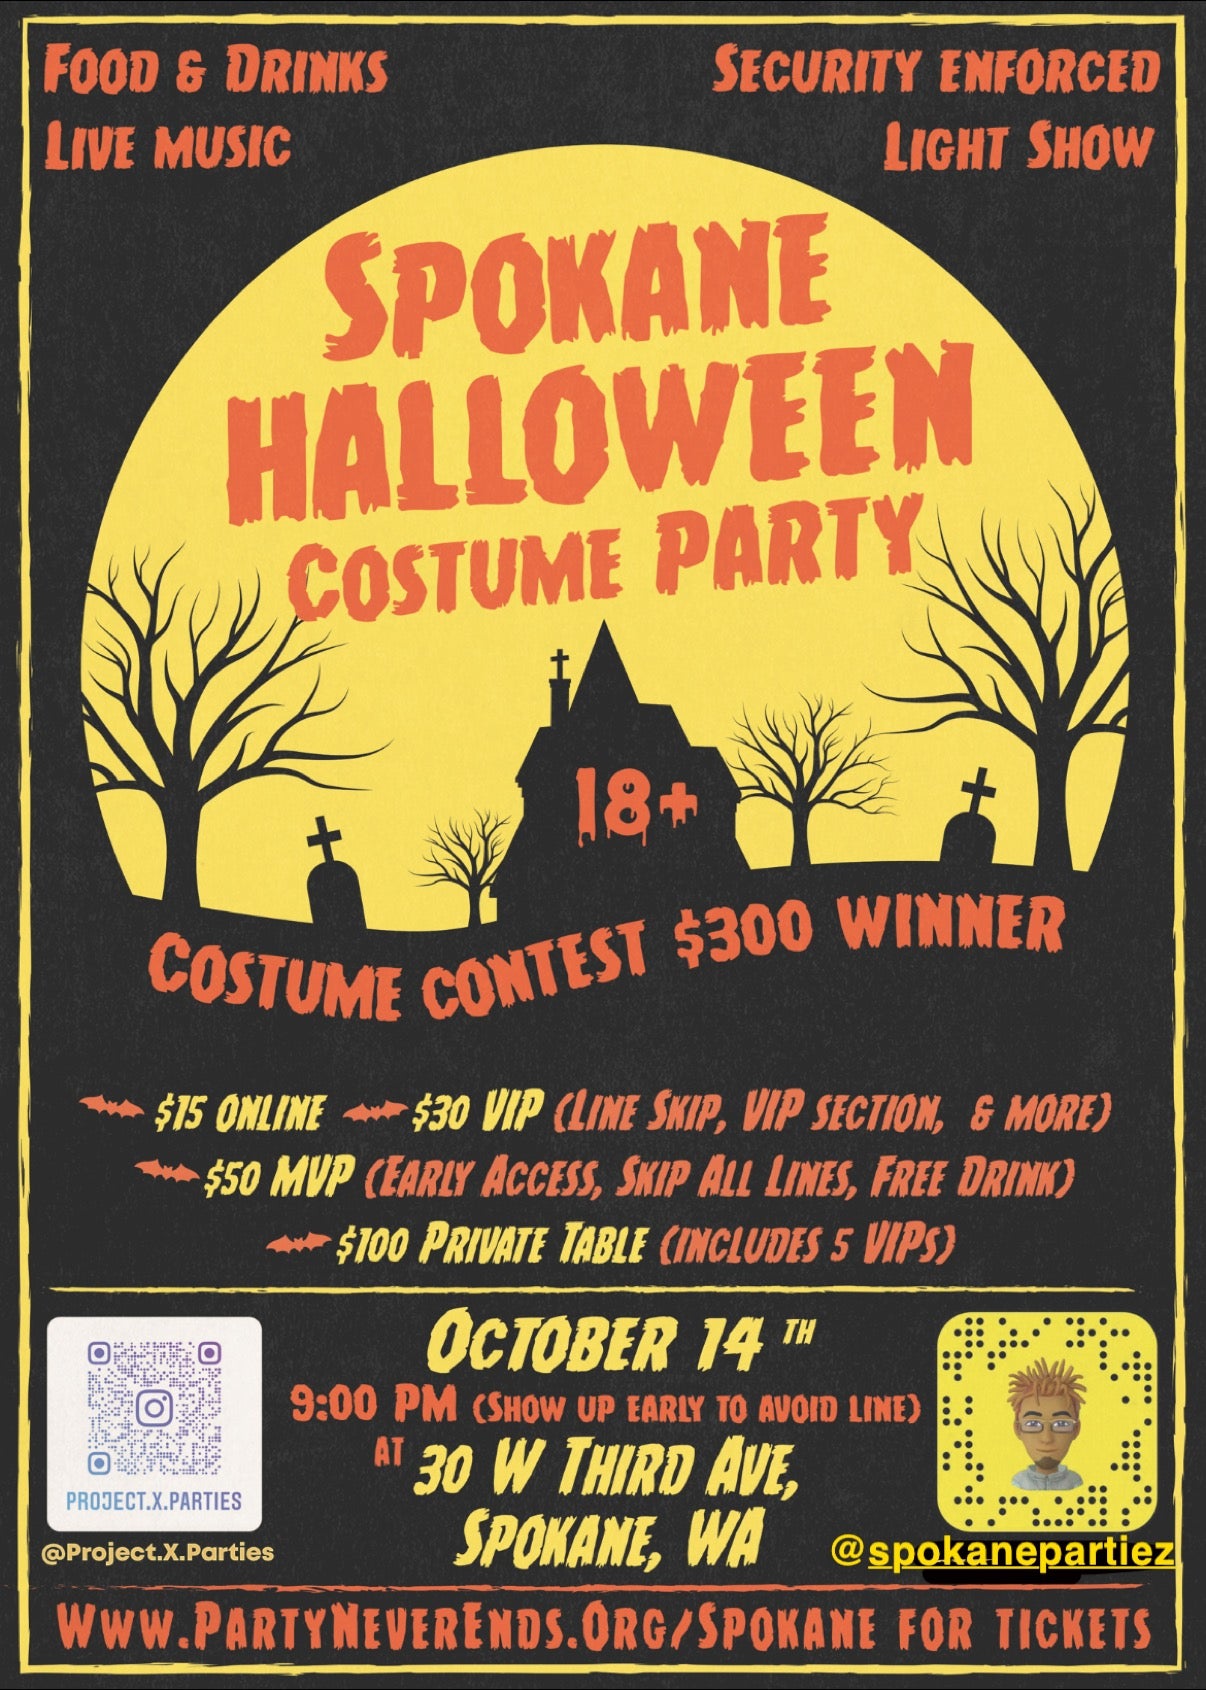 Spokane Halloween Party General Admission